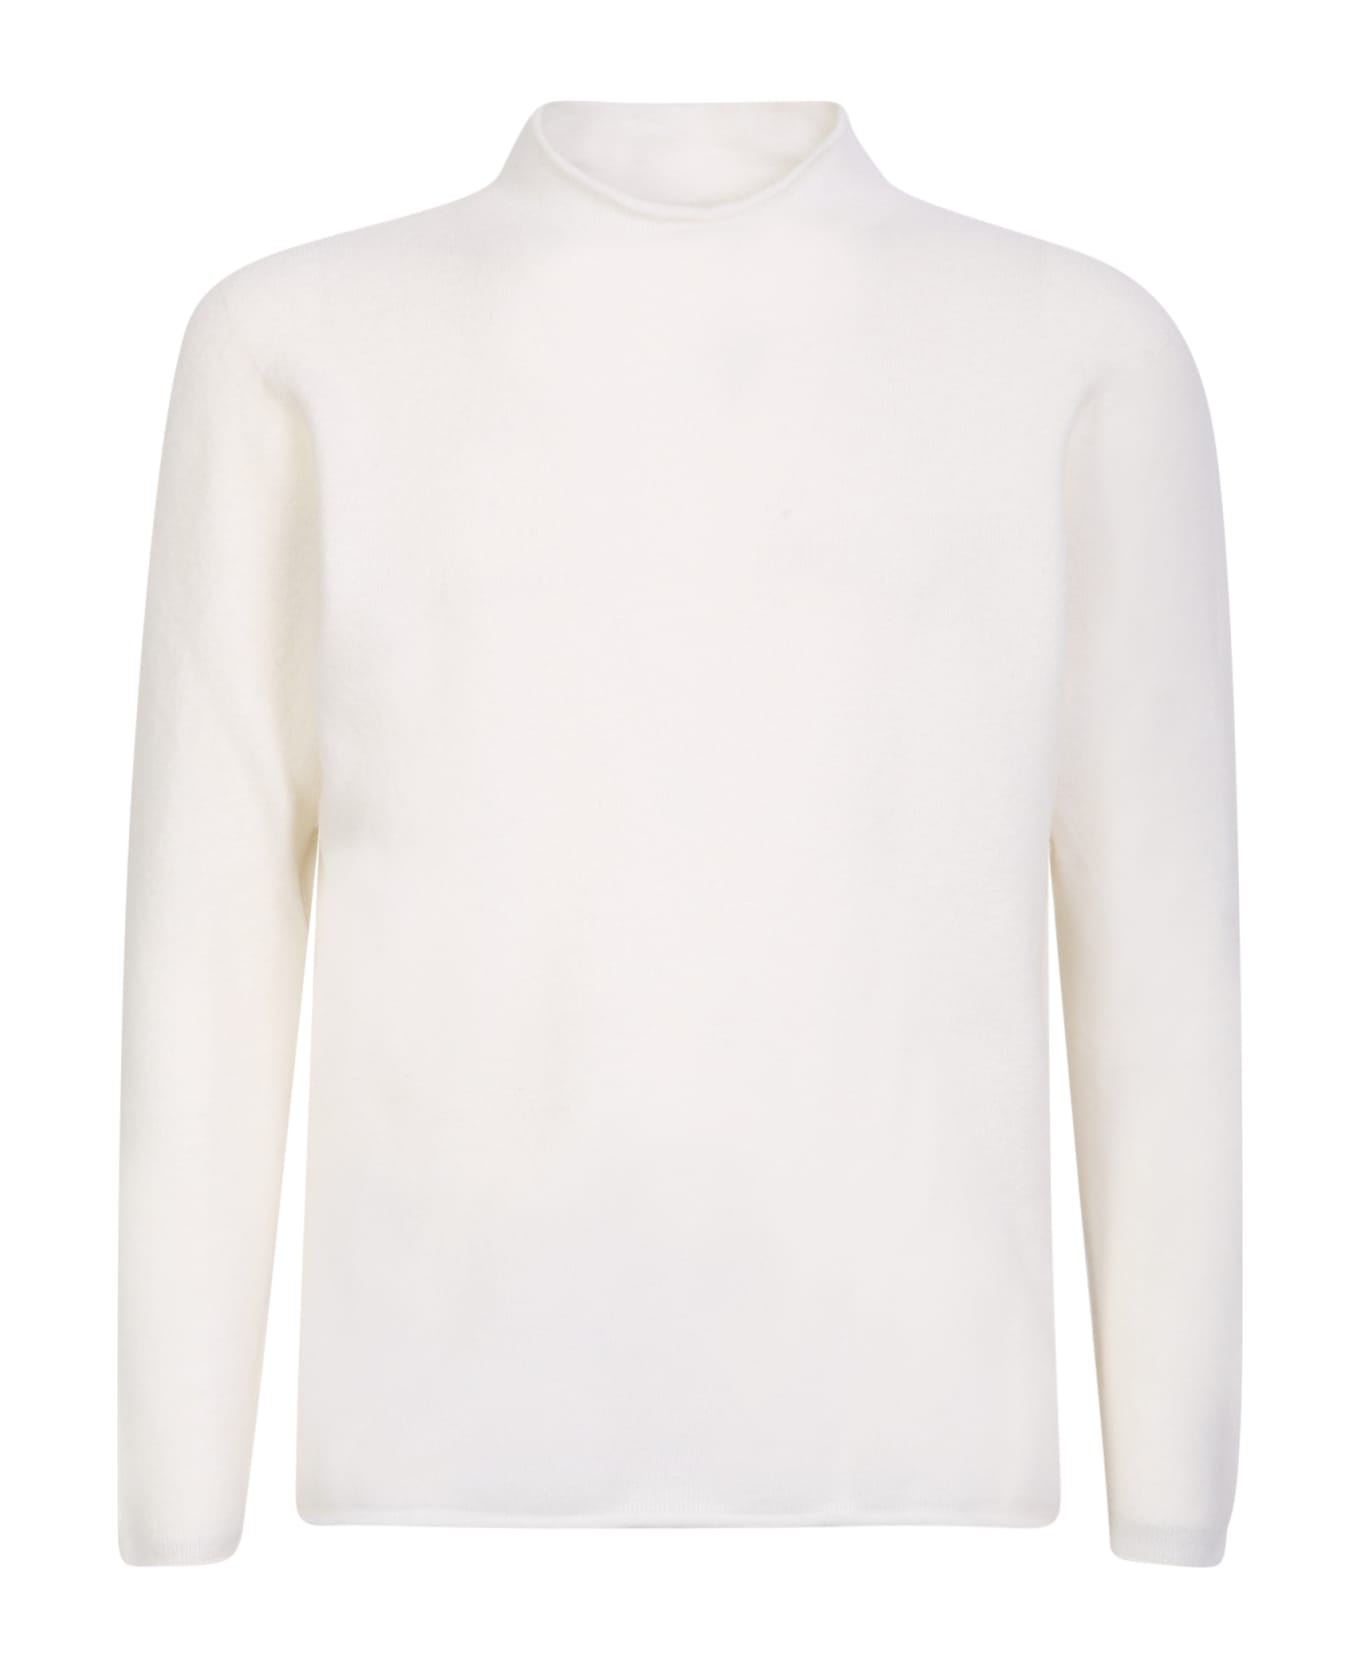 Original Vintage Style Original Vintage High-neck White Sweater - White ニットウェア